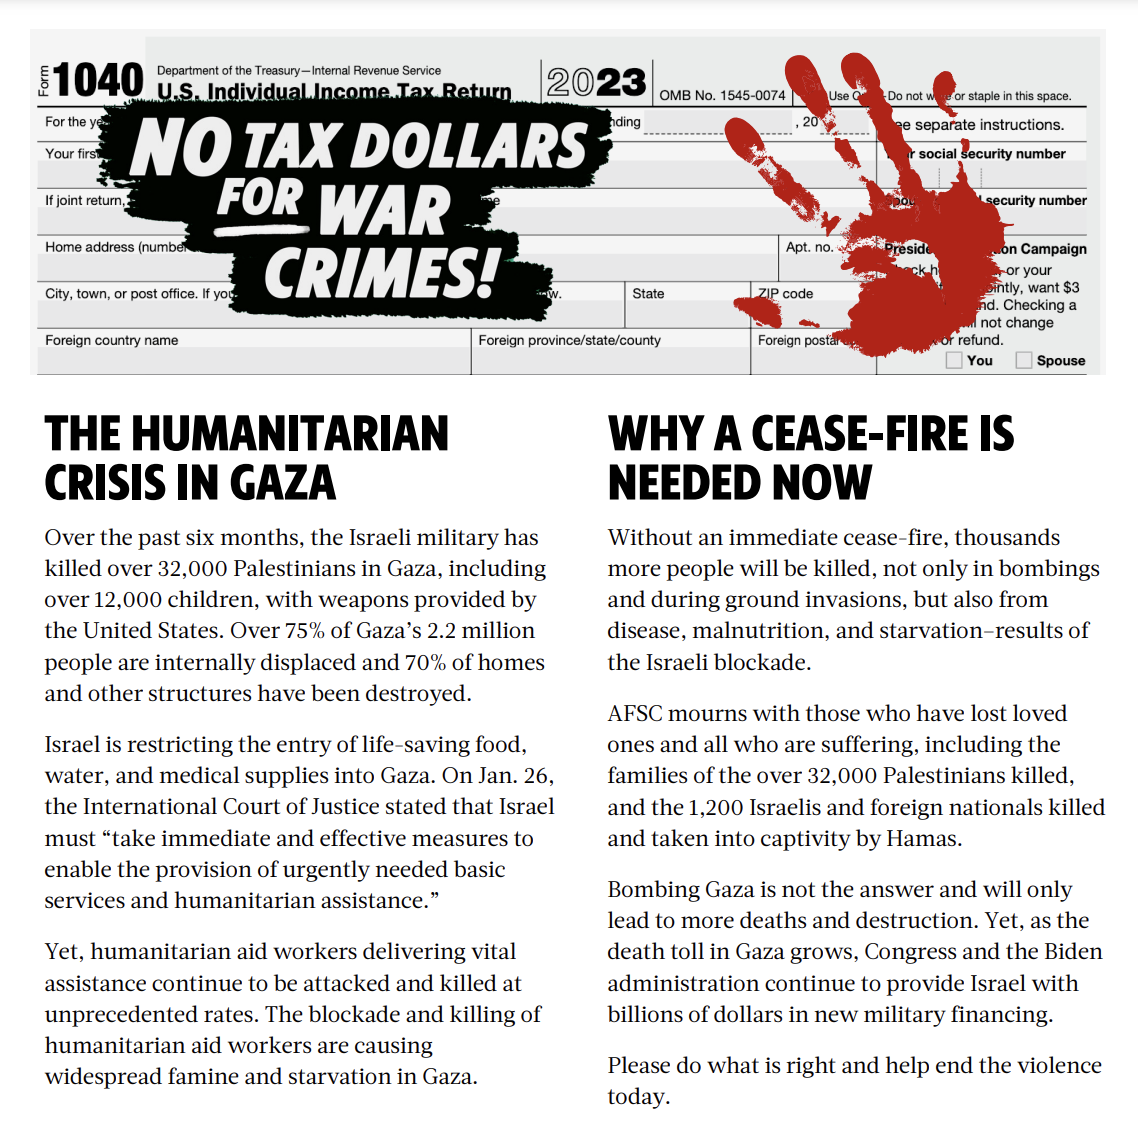 No Tax Dollars for War Crimes